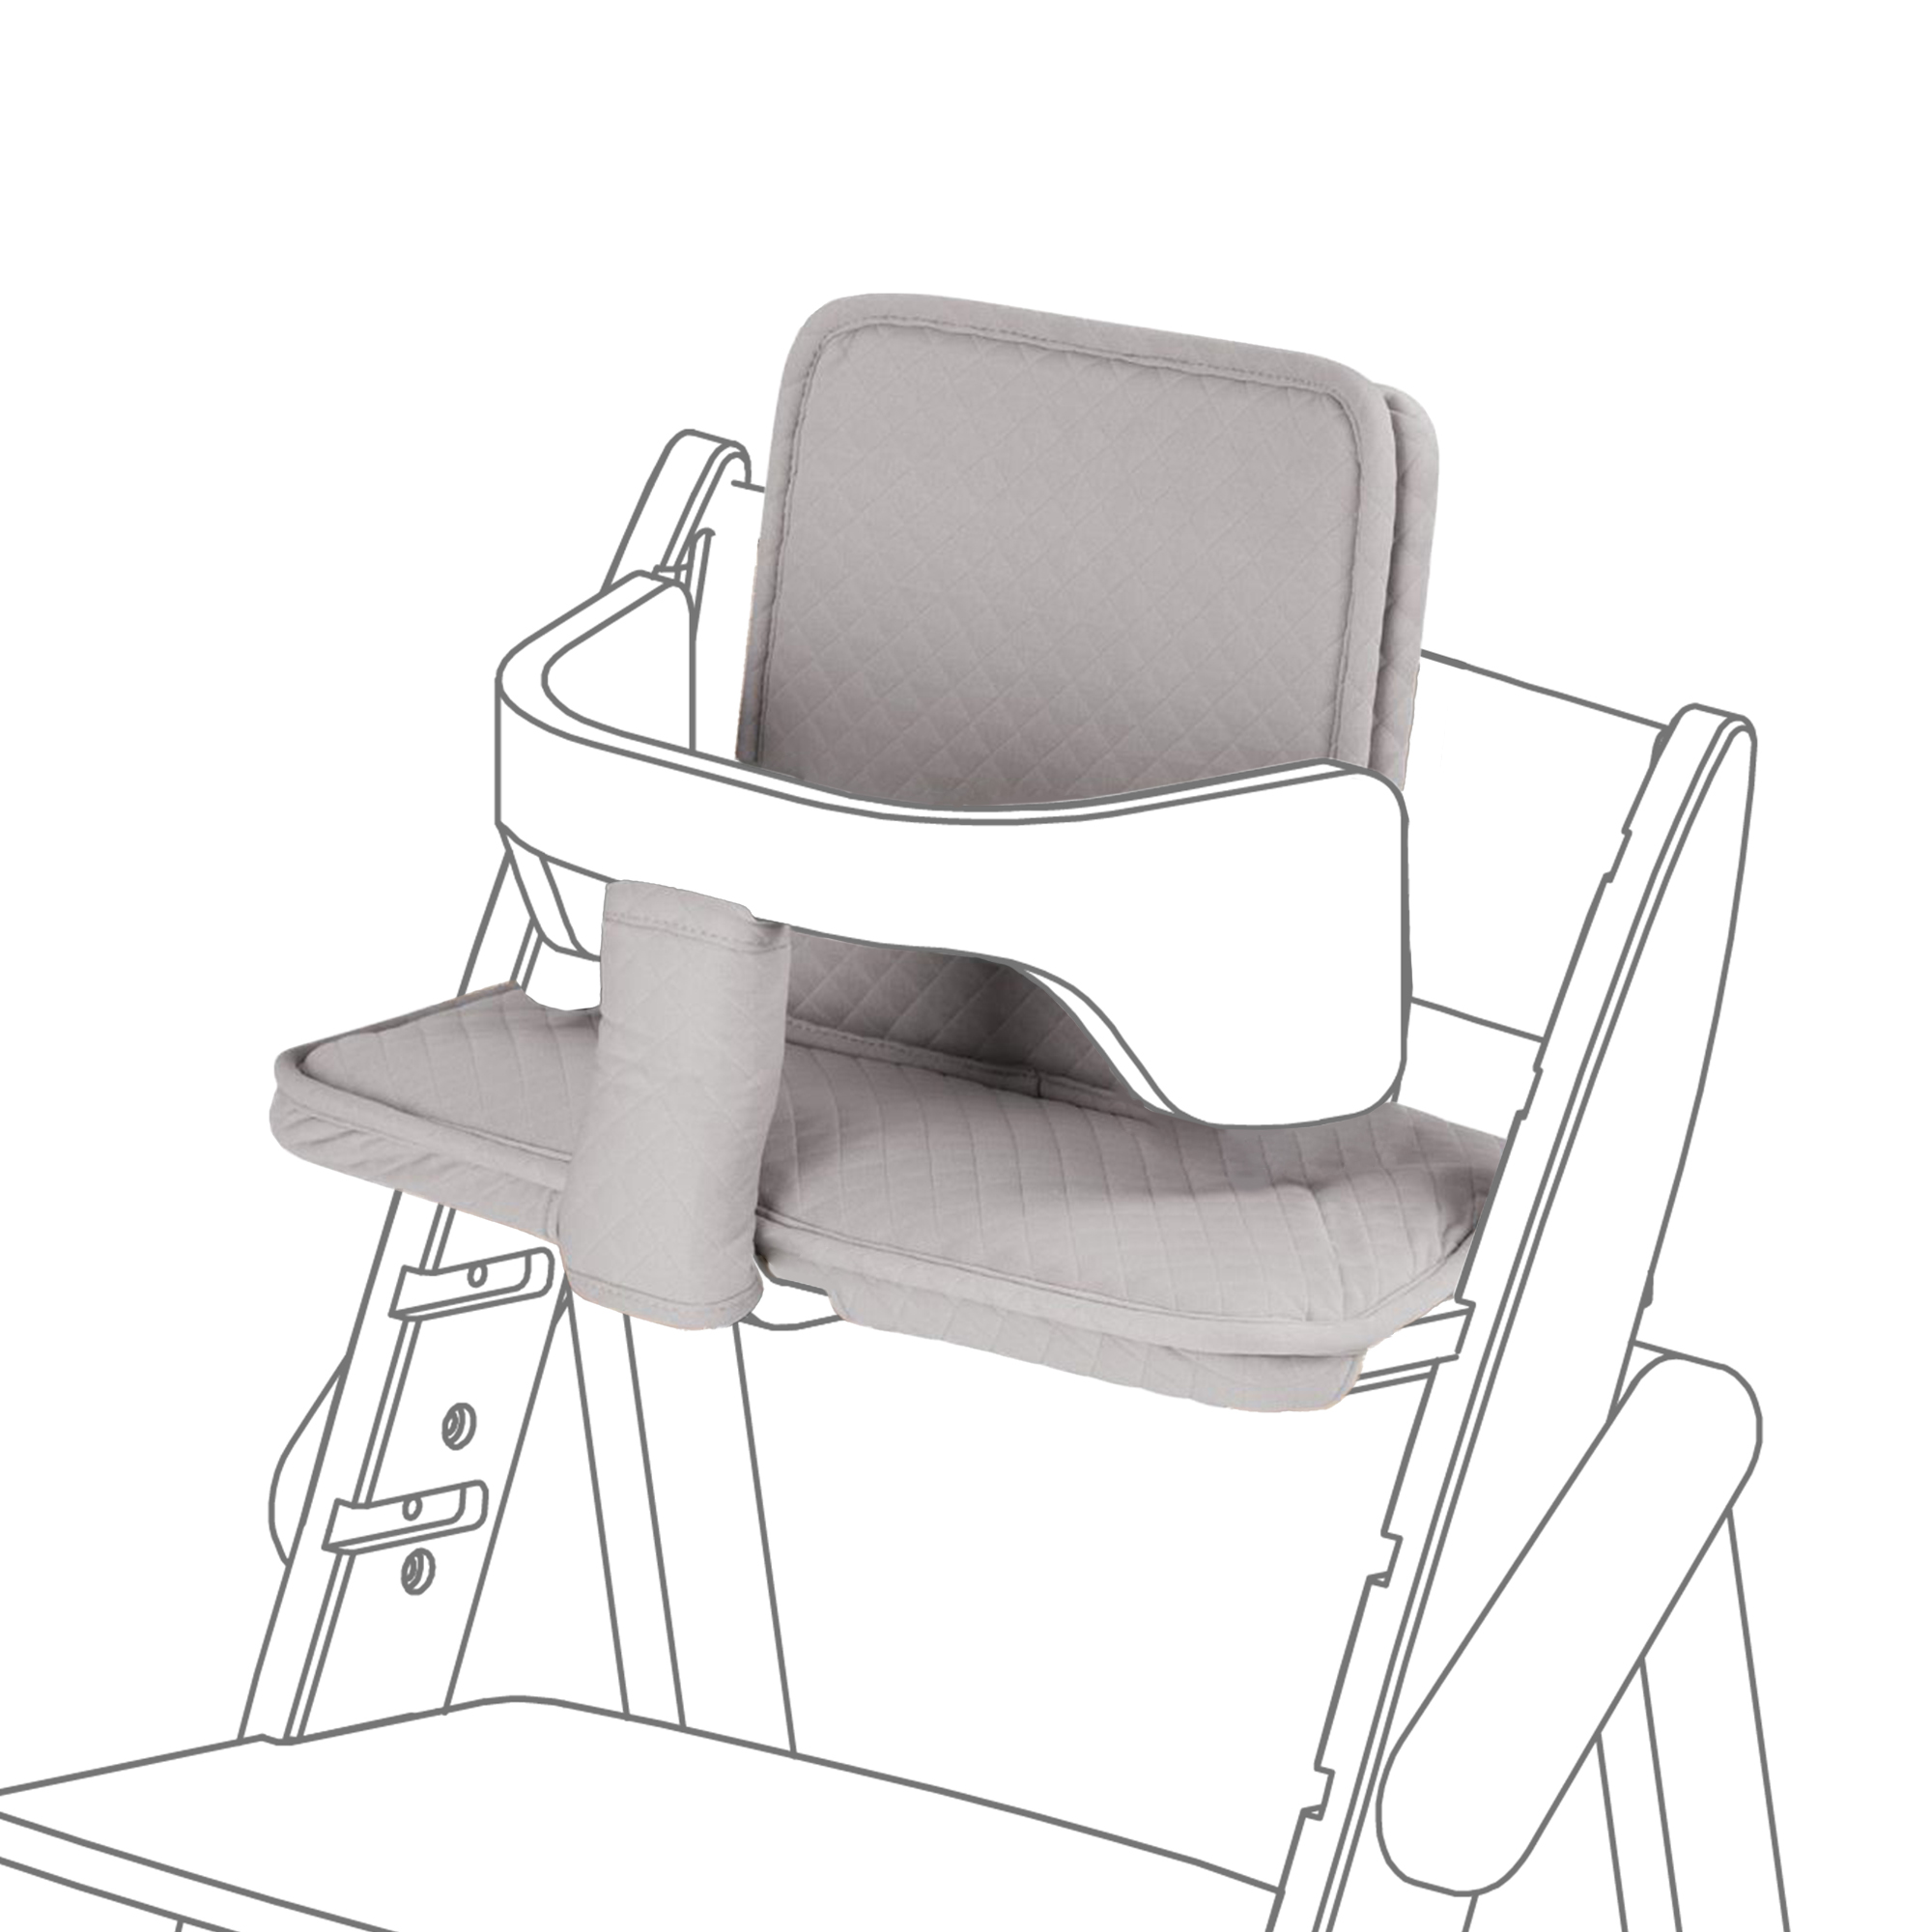 Набор подушек Moji Cushion Set для стульчика Yippy birch 12003342214 набор подушек moji cushion set для стульчика yippy mint 12003342213